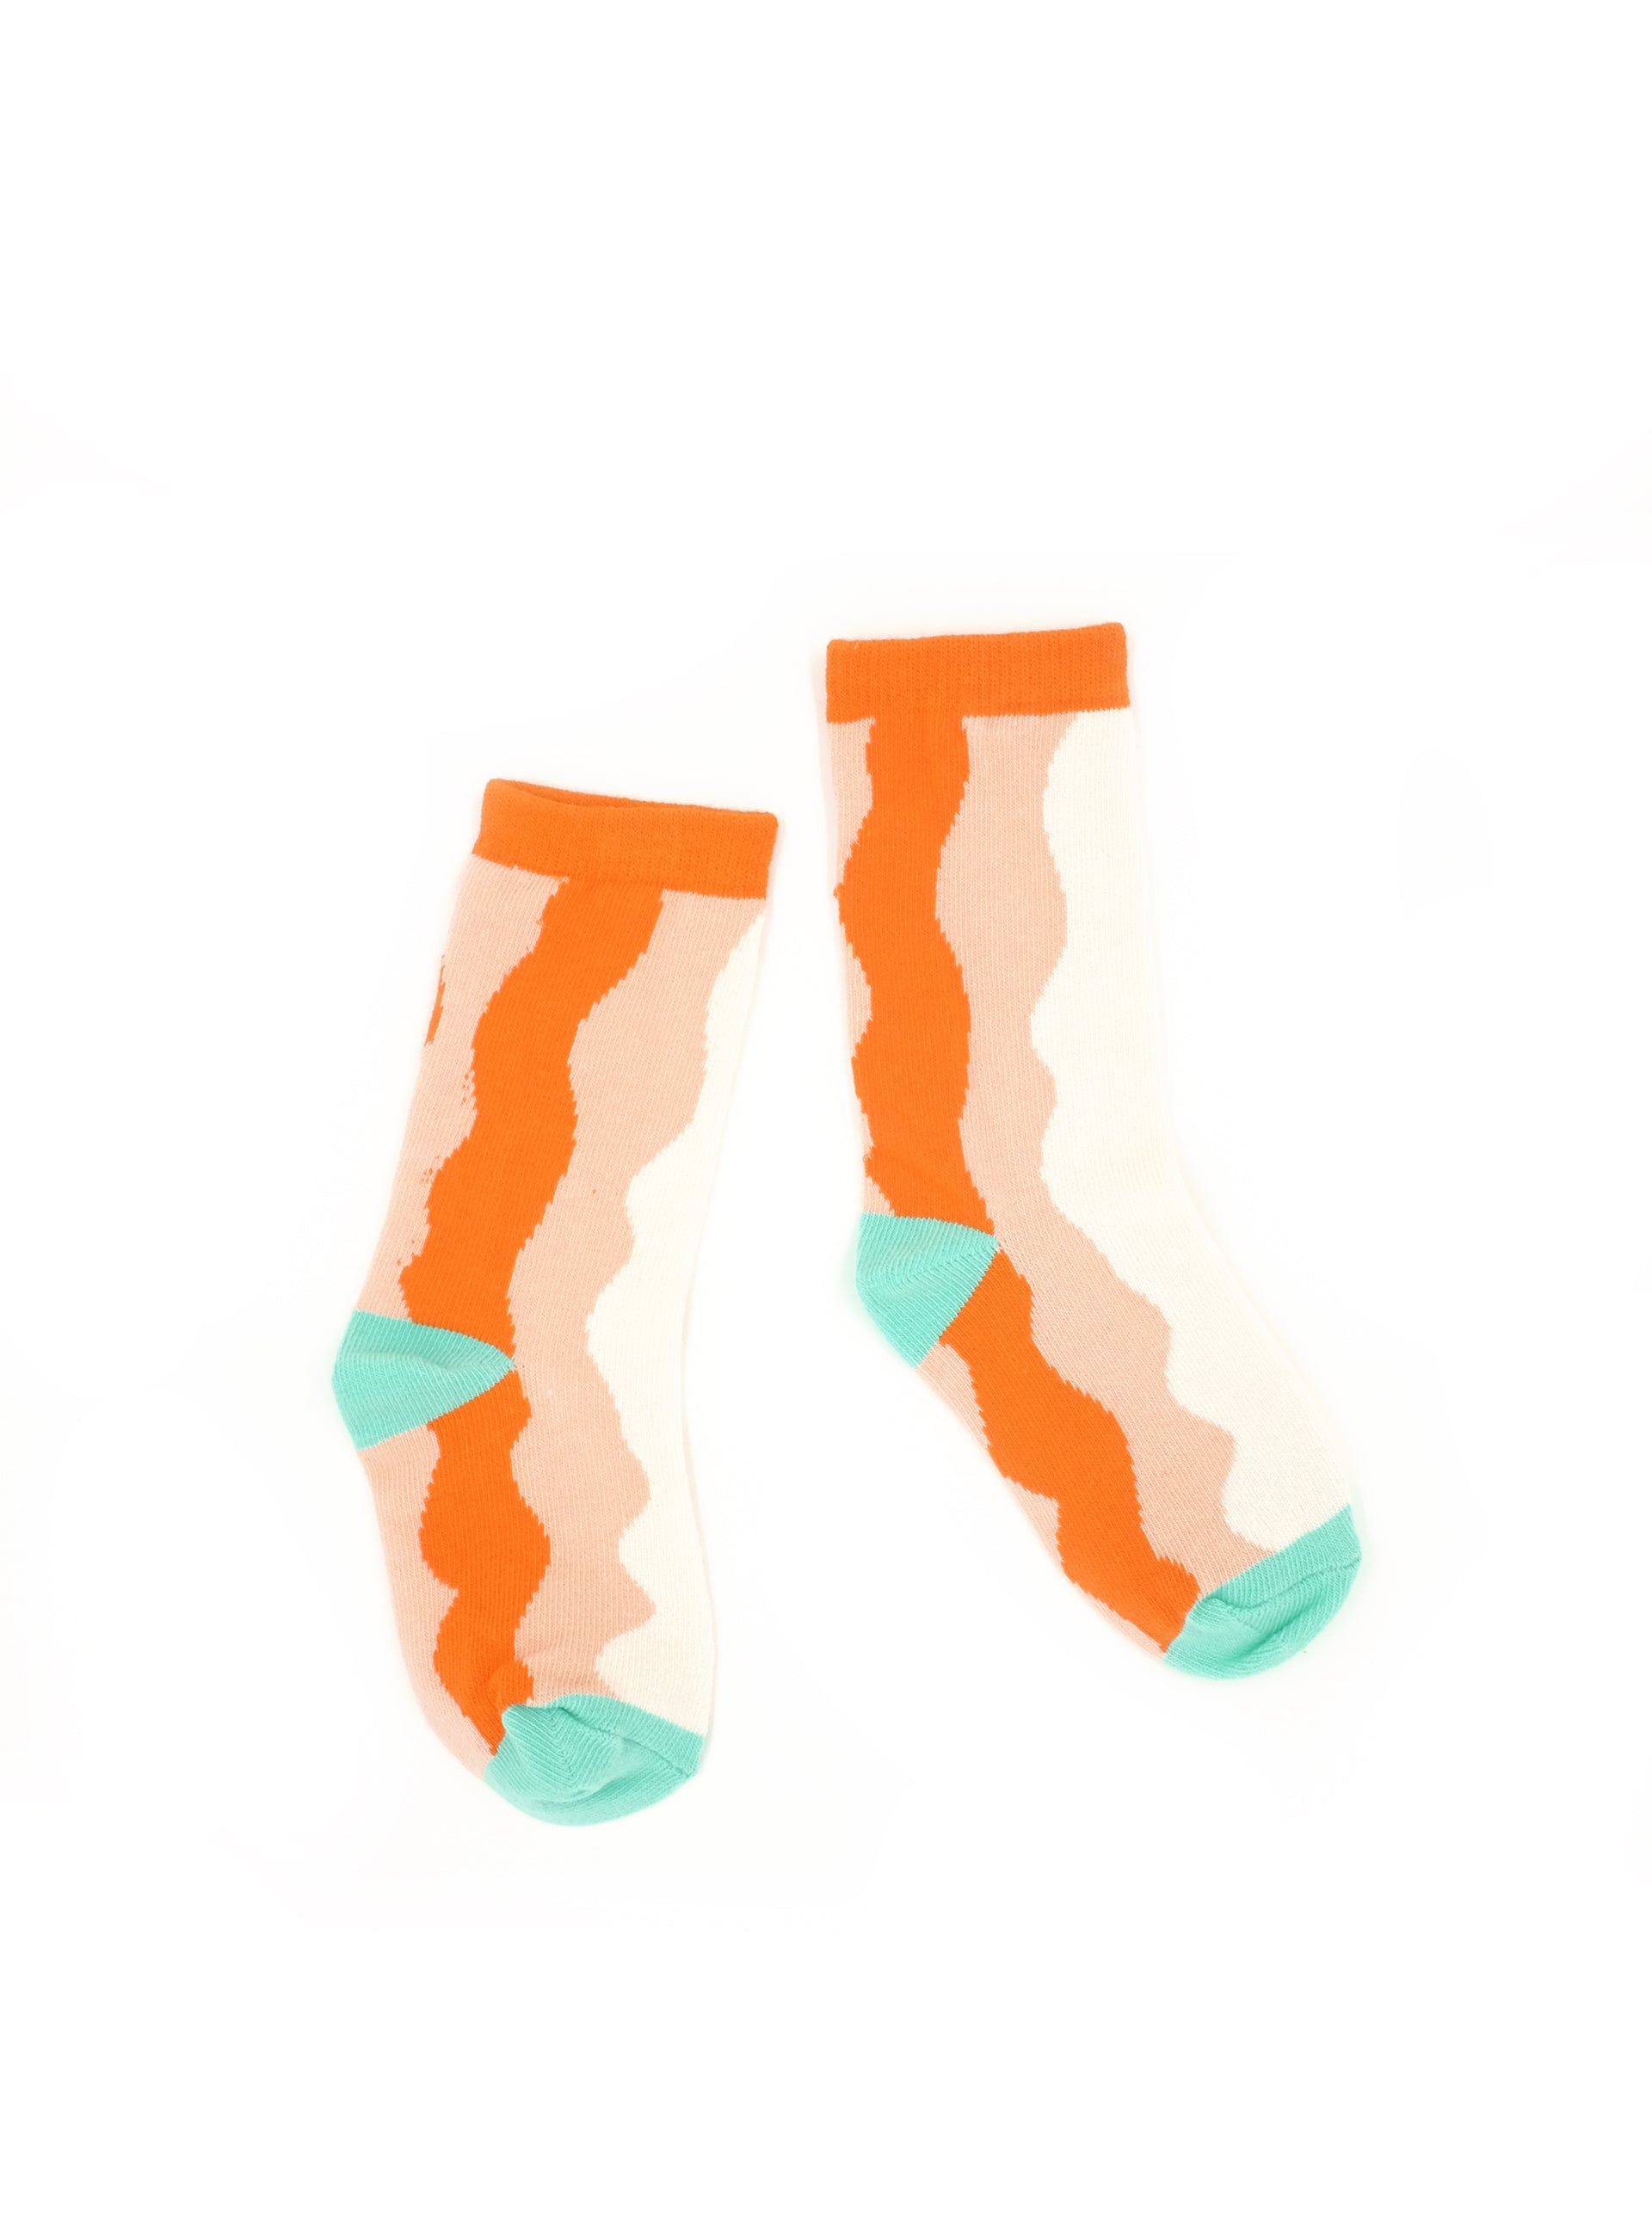 abstract bright tangerine socks